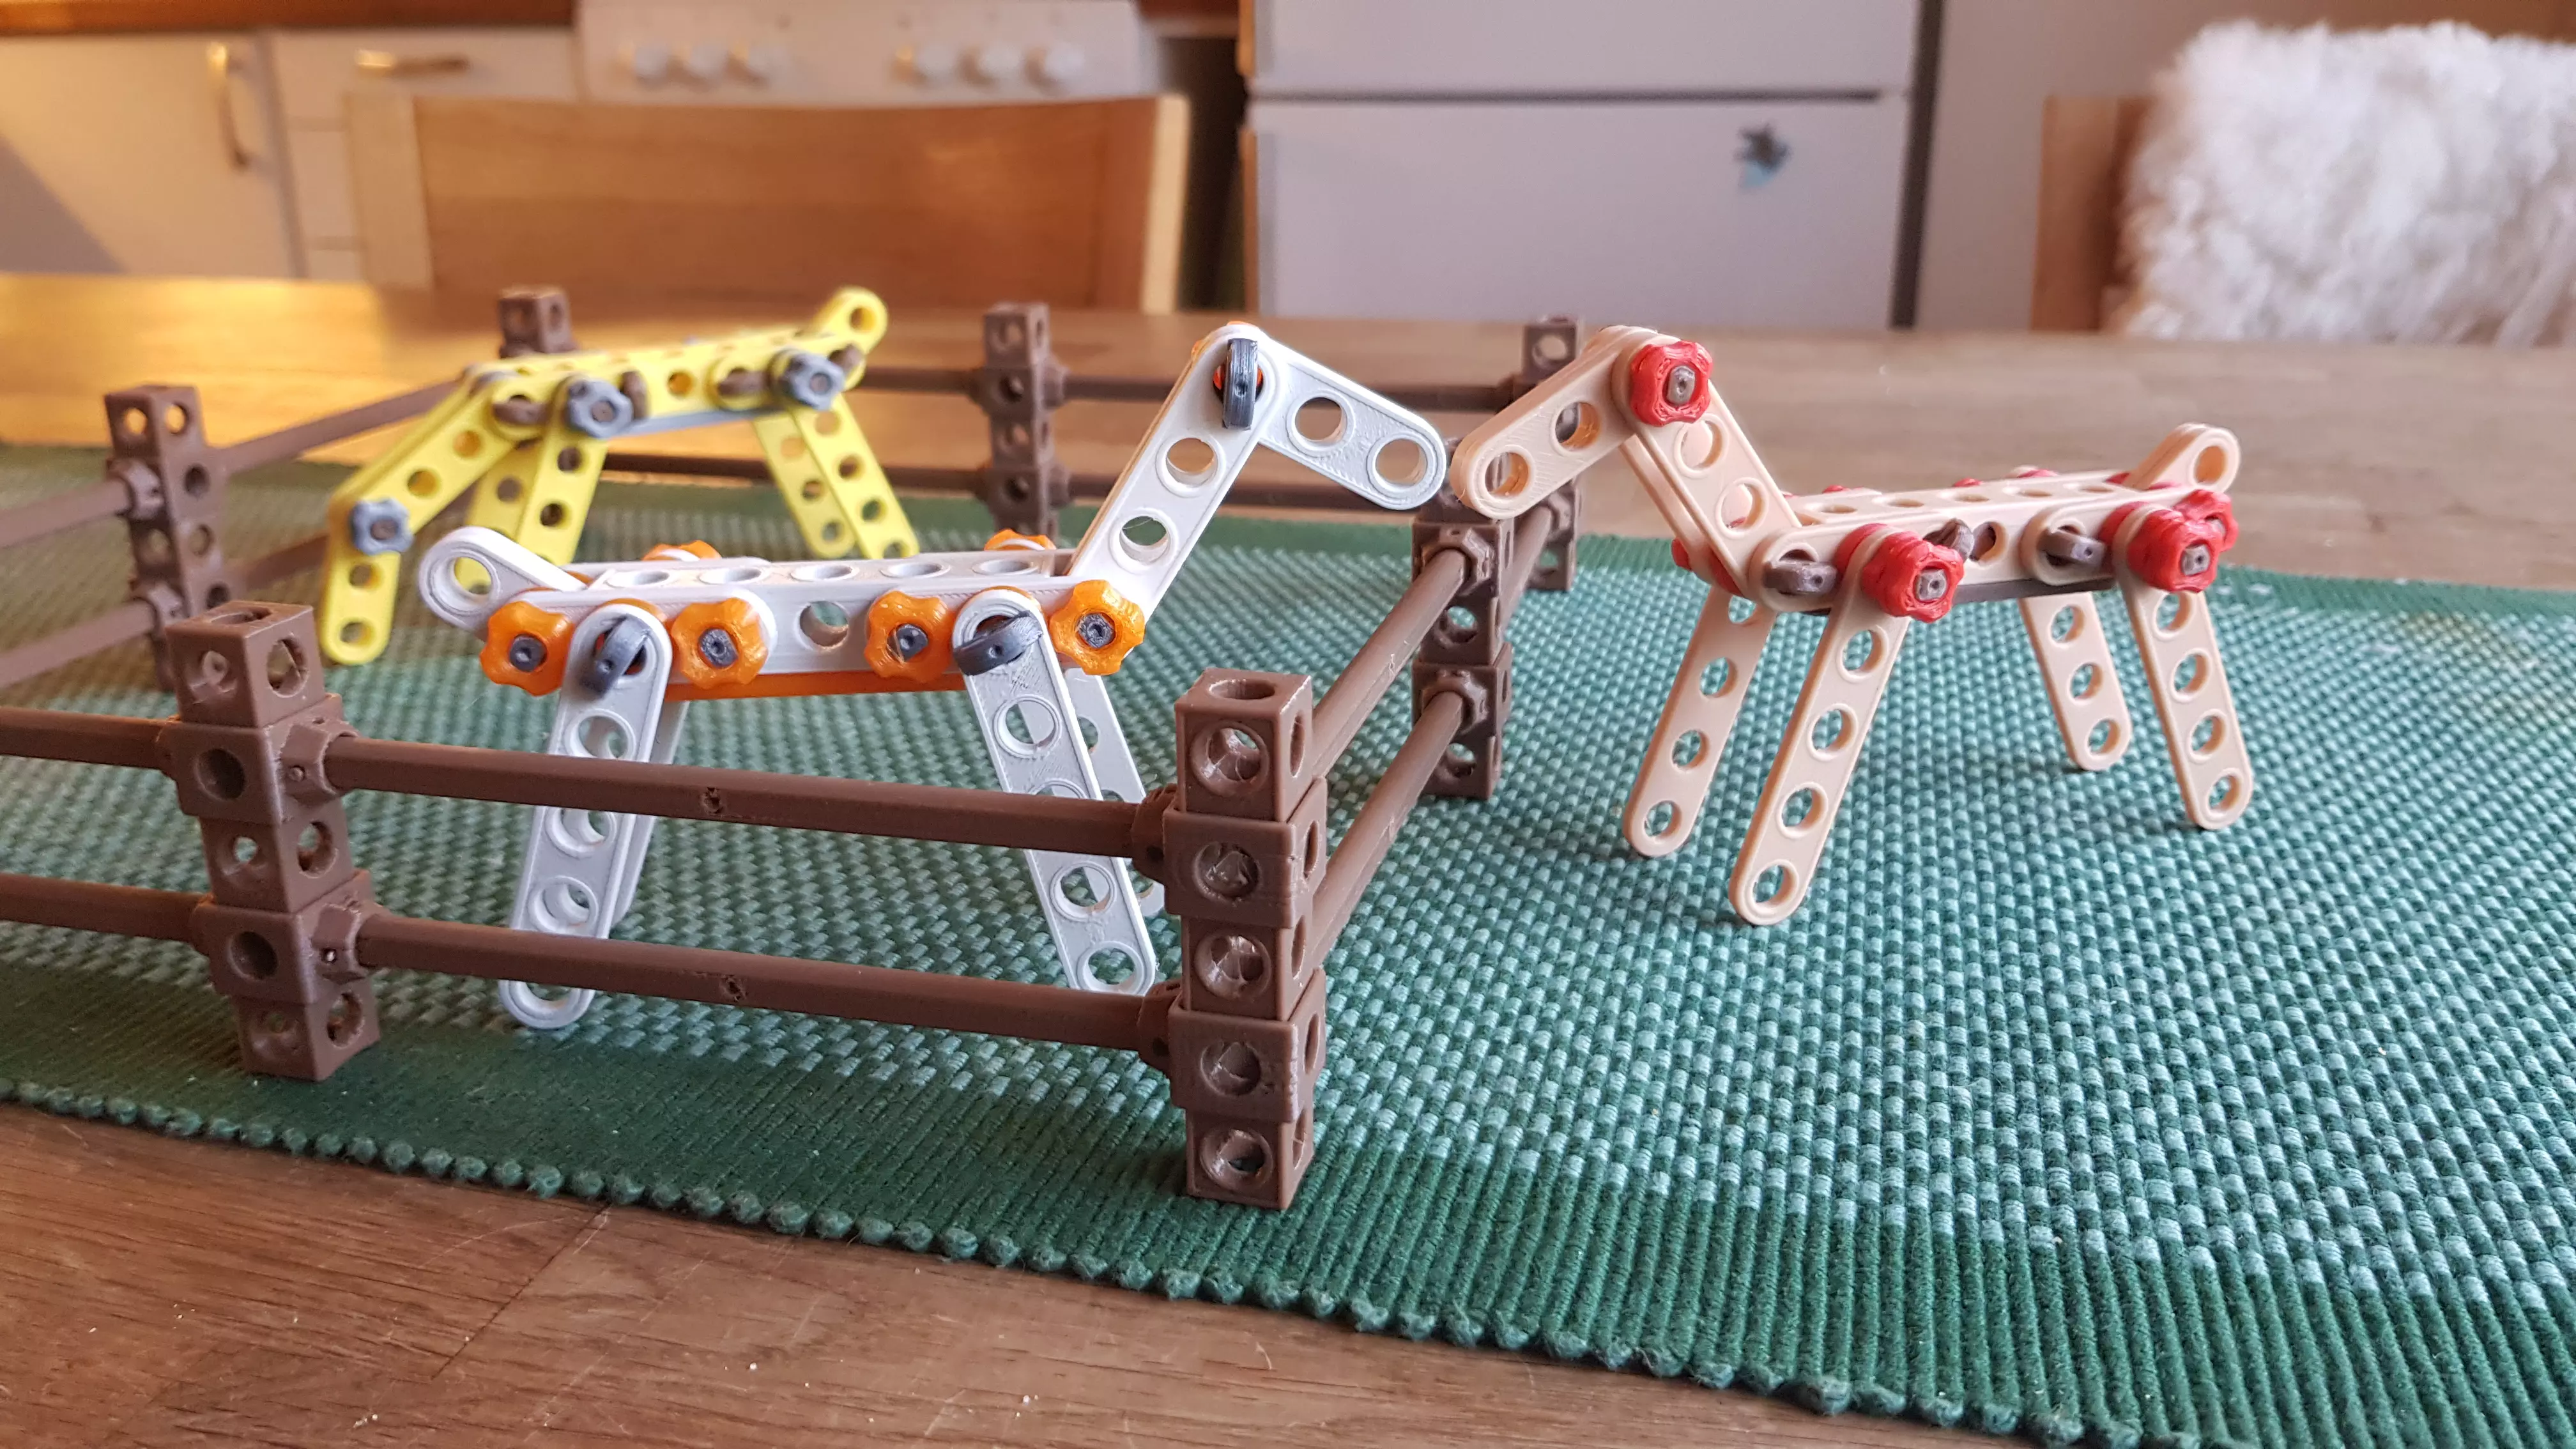 STEMFIE 3D-printable toy horse